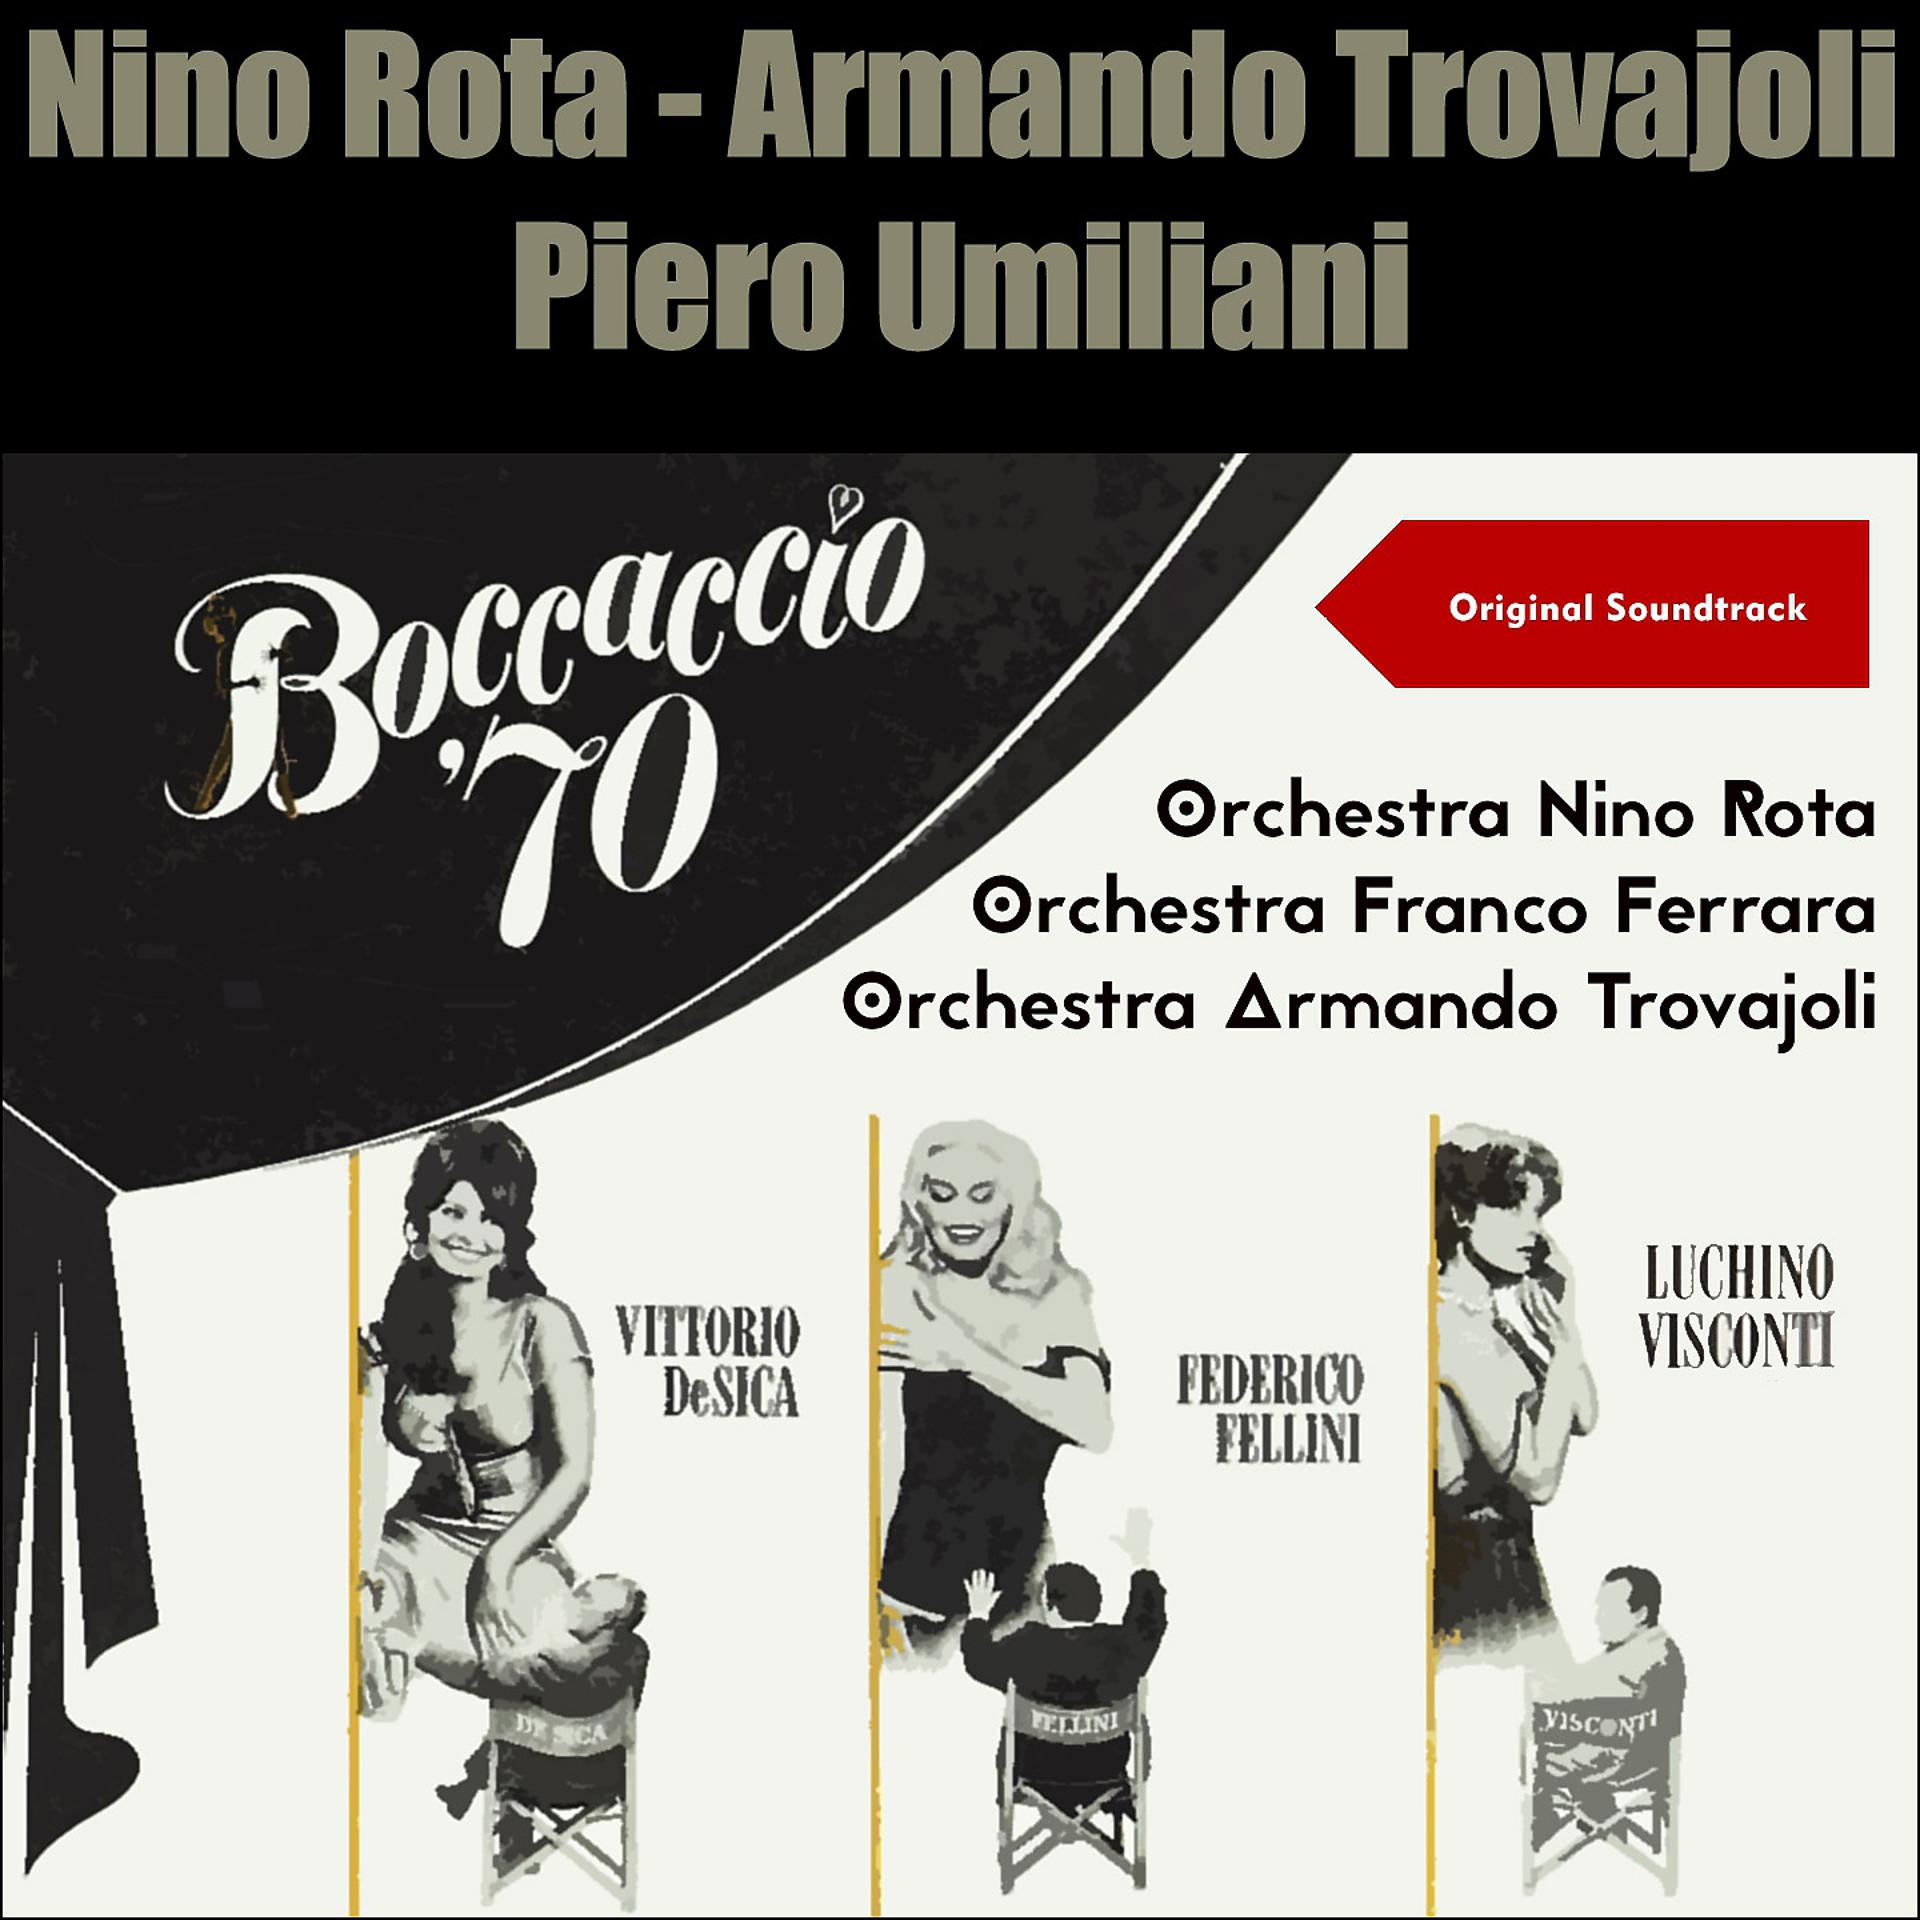 Постер альбома Nino Rota - Armando Trovajoli - Piero Umiliani - Boccaccio '70